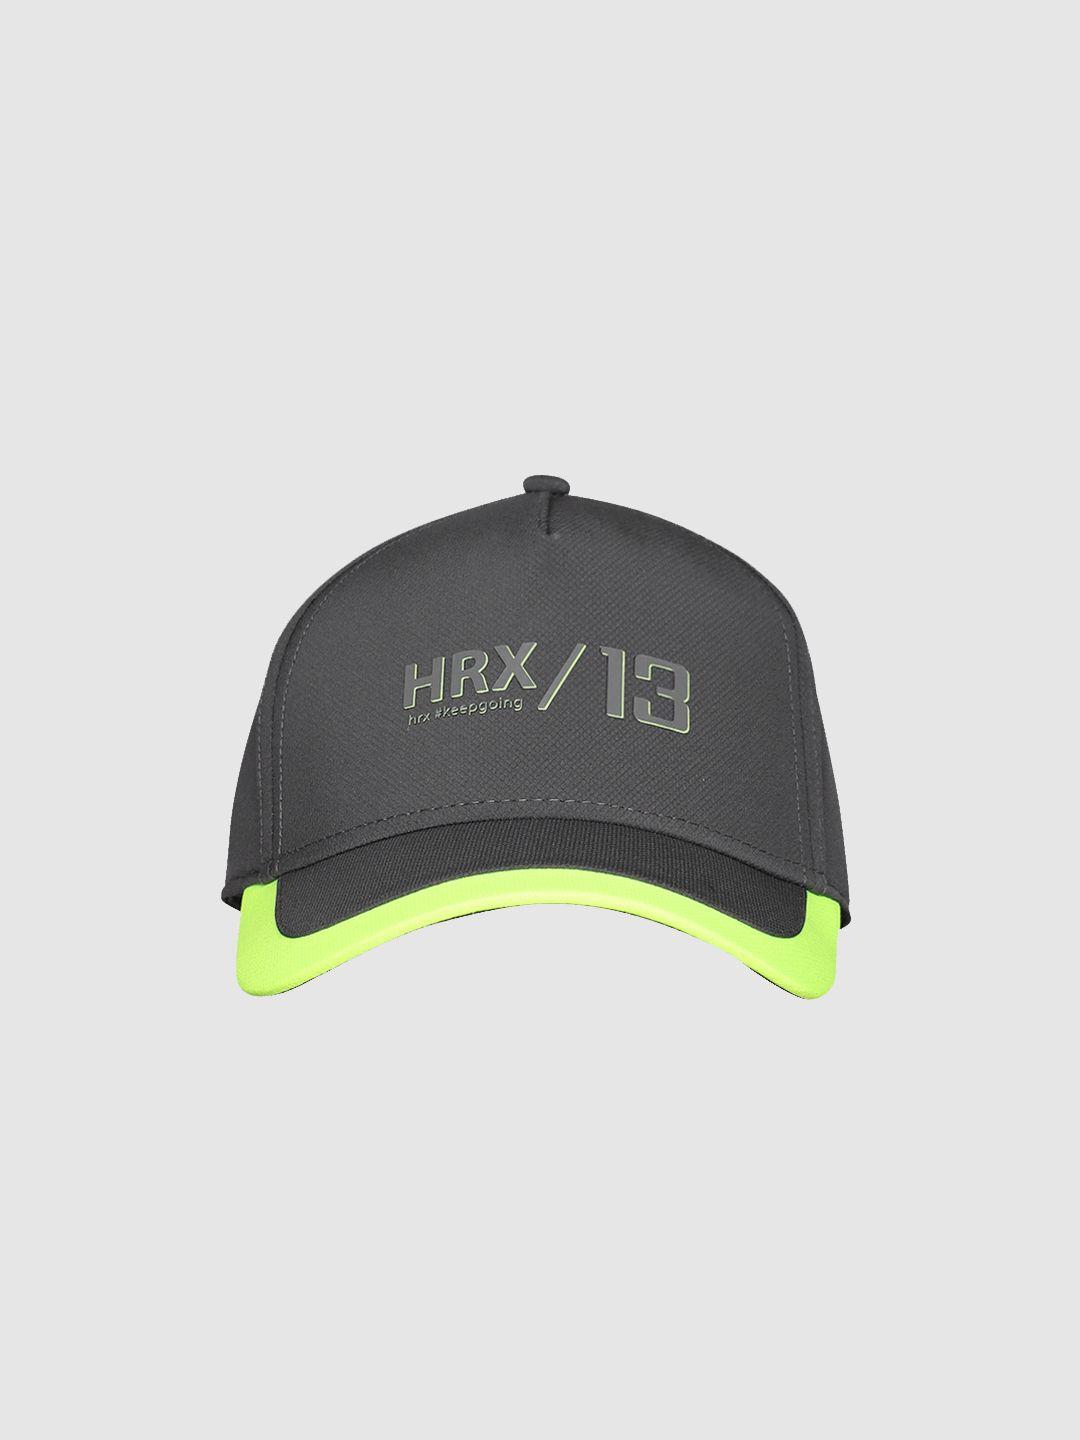 hrx by hrithik roshan men charcoal grey solid training dryfit sweatband cap